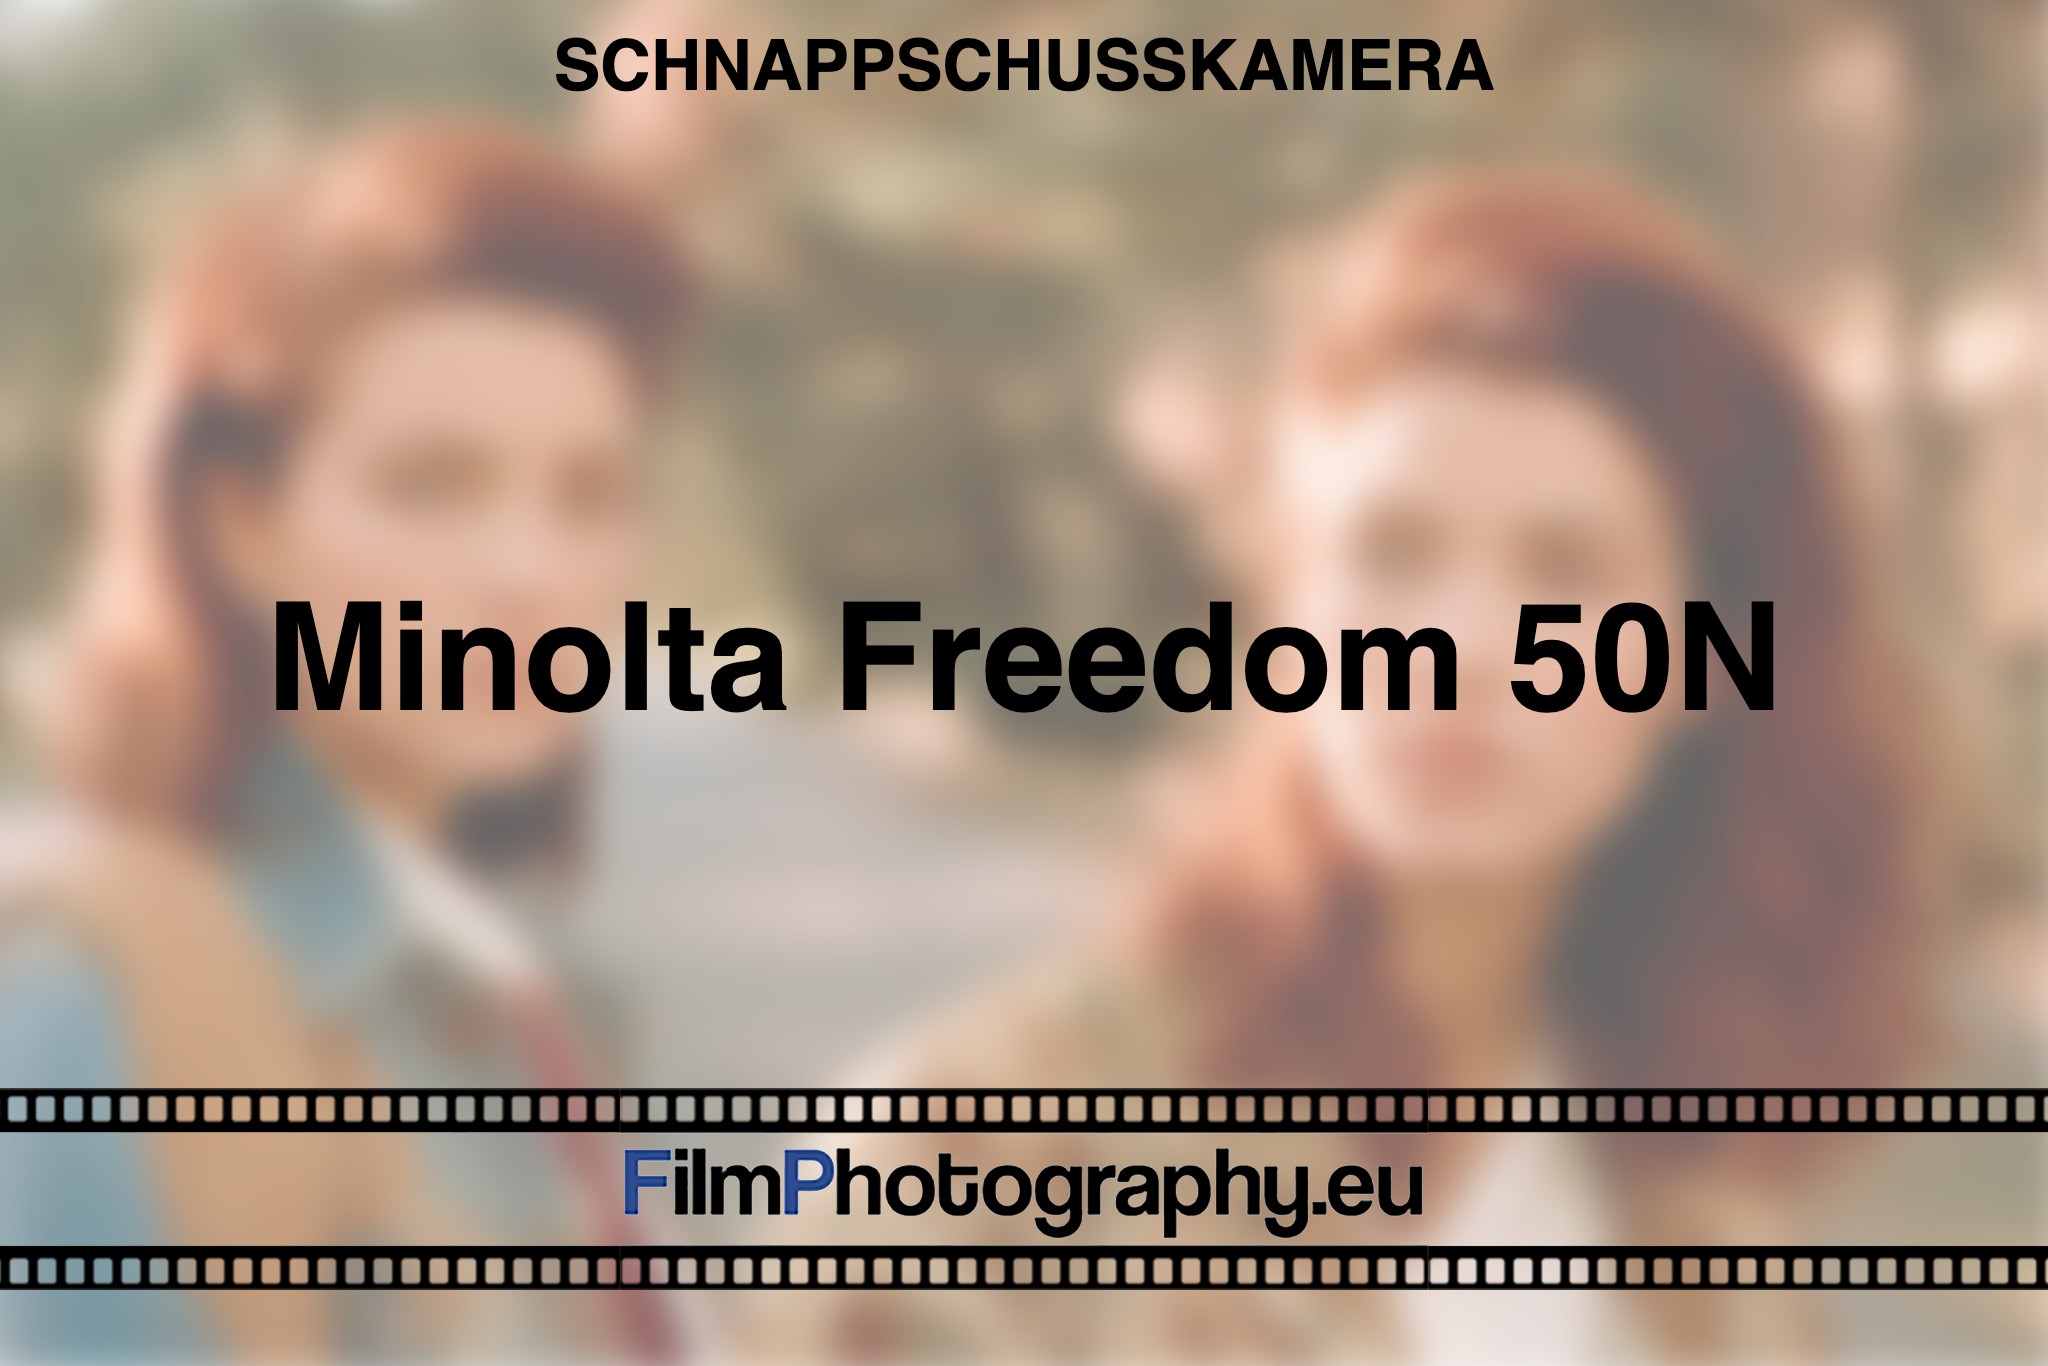 minolta-freedom-50n-schnappschusskamera-bnv